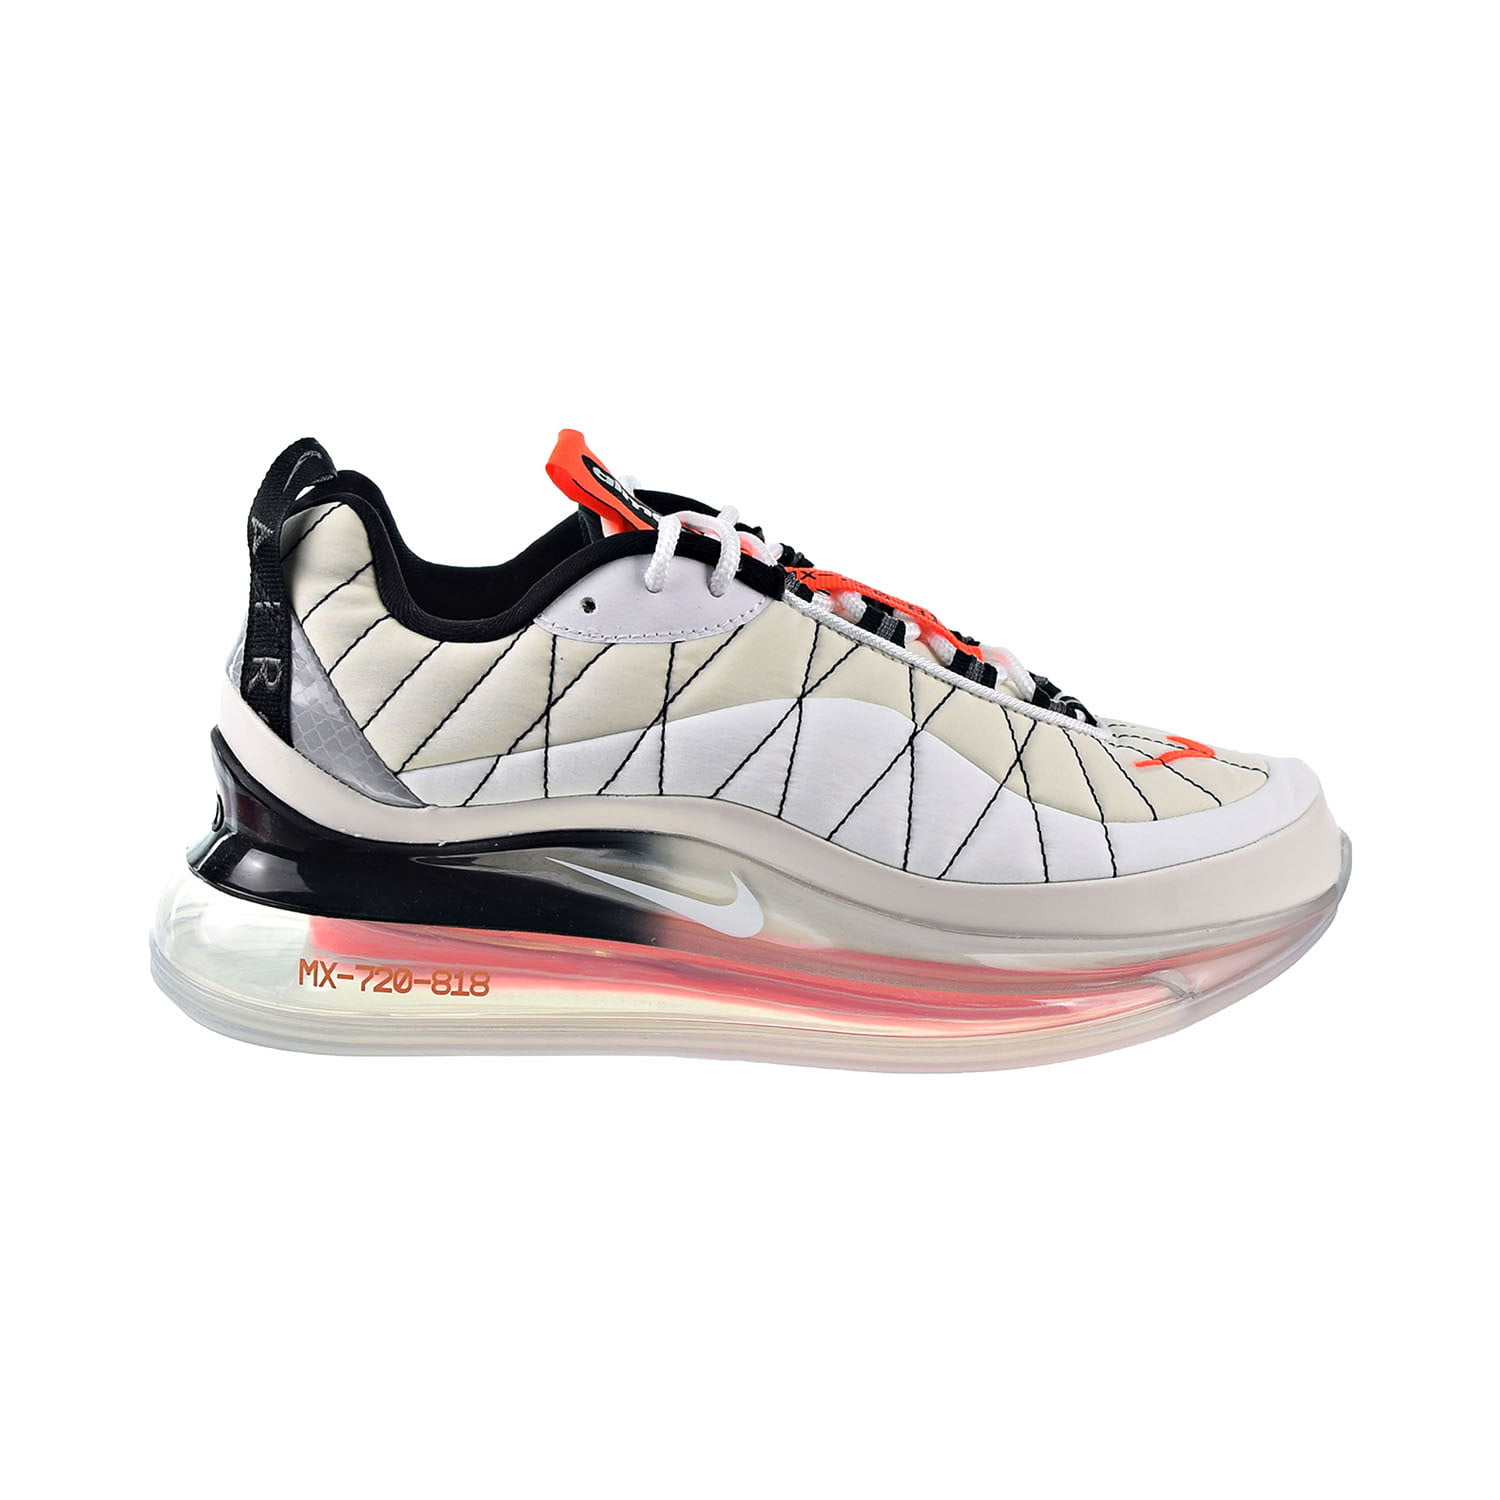 Nike Air Max MX 720-818 Women's Shoes Sail-White-Black-Hyper Orange  ci3869-100 